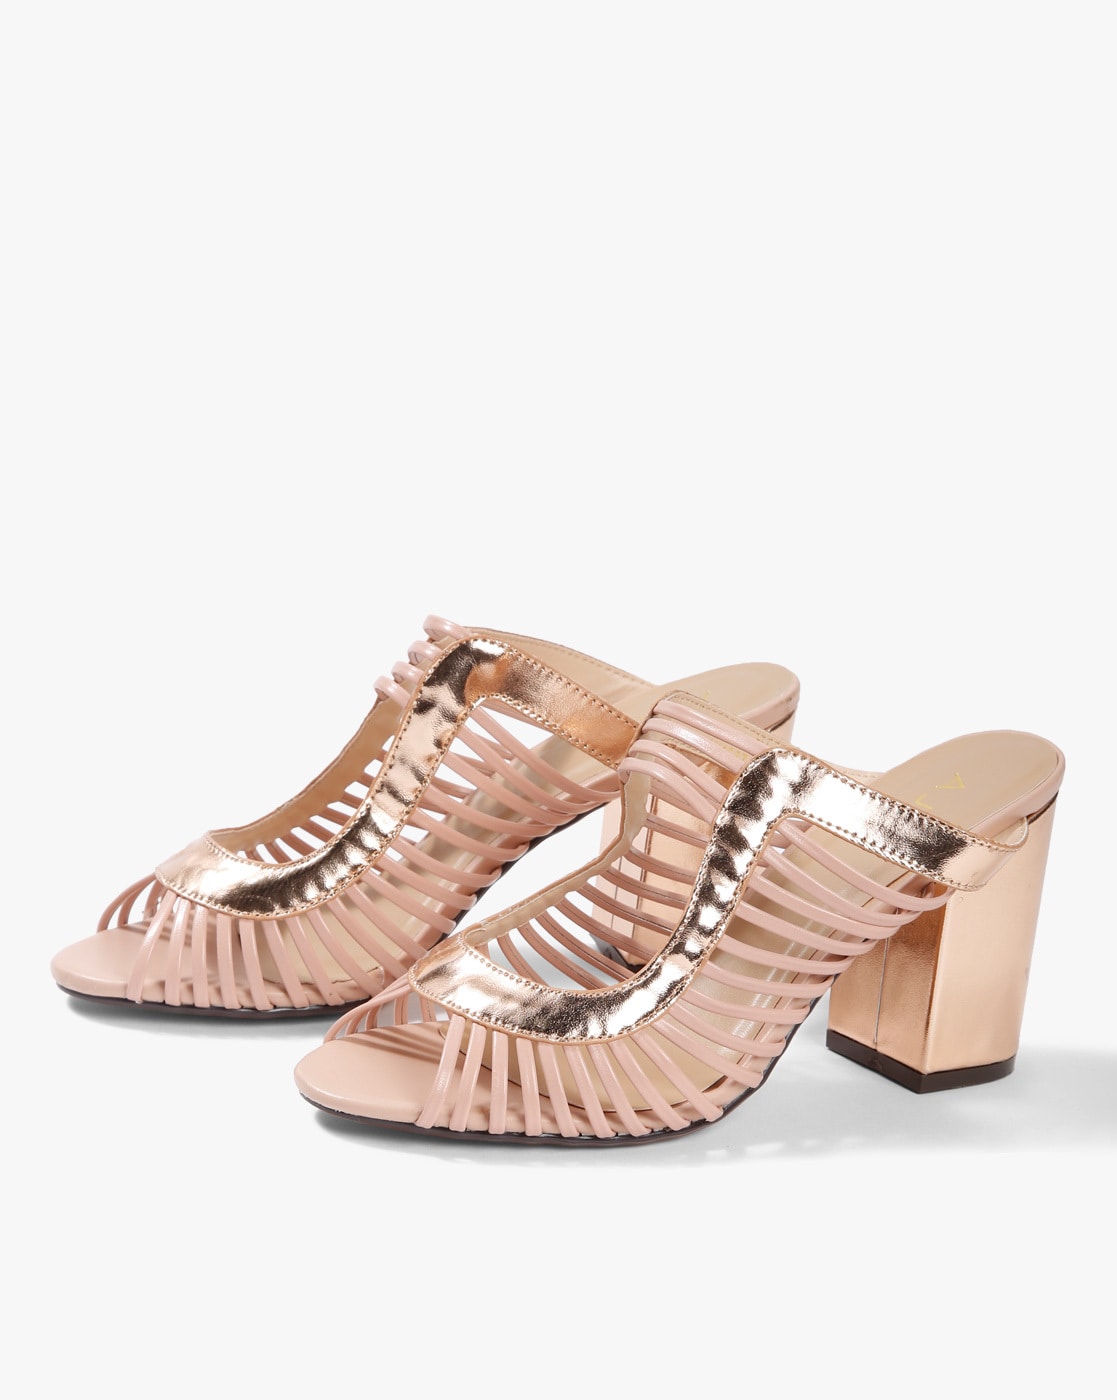 pink strappy block heels